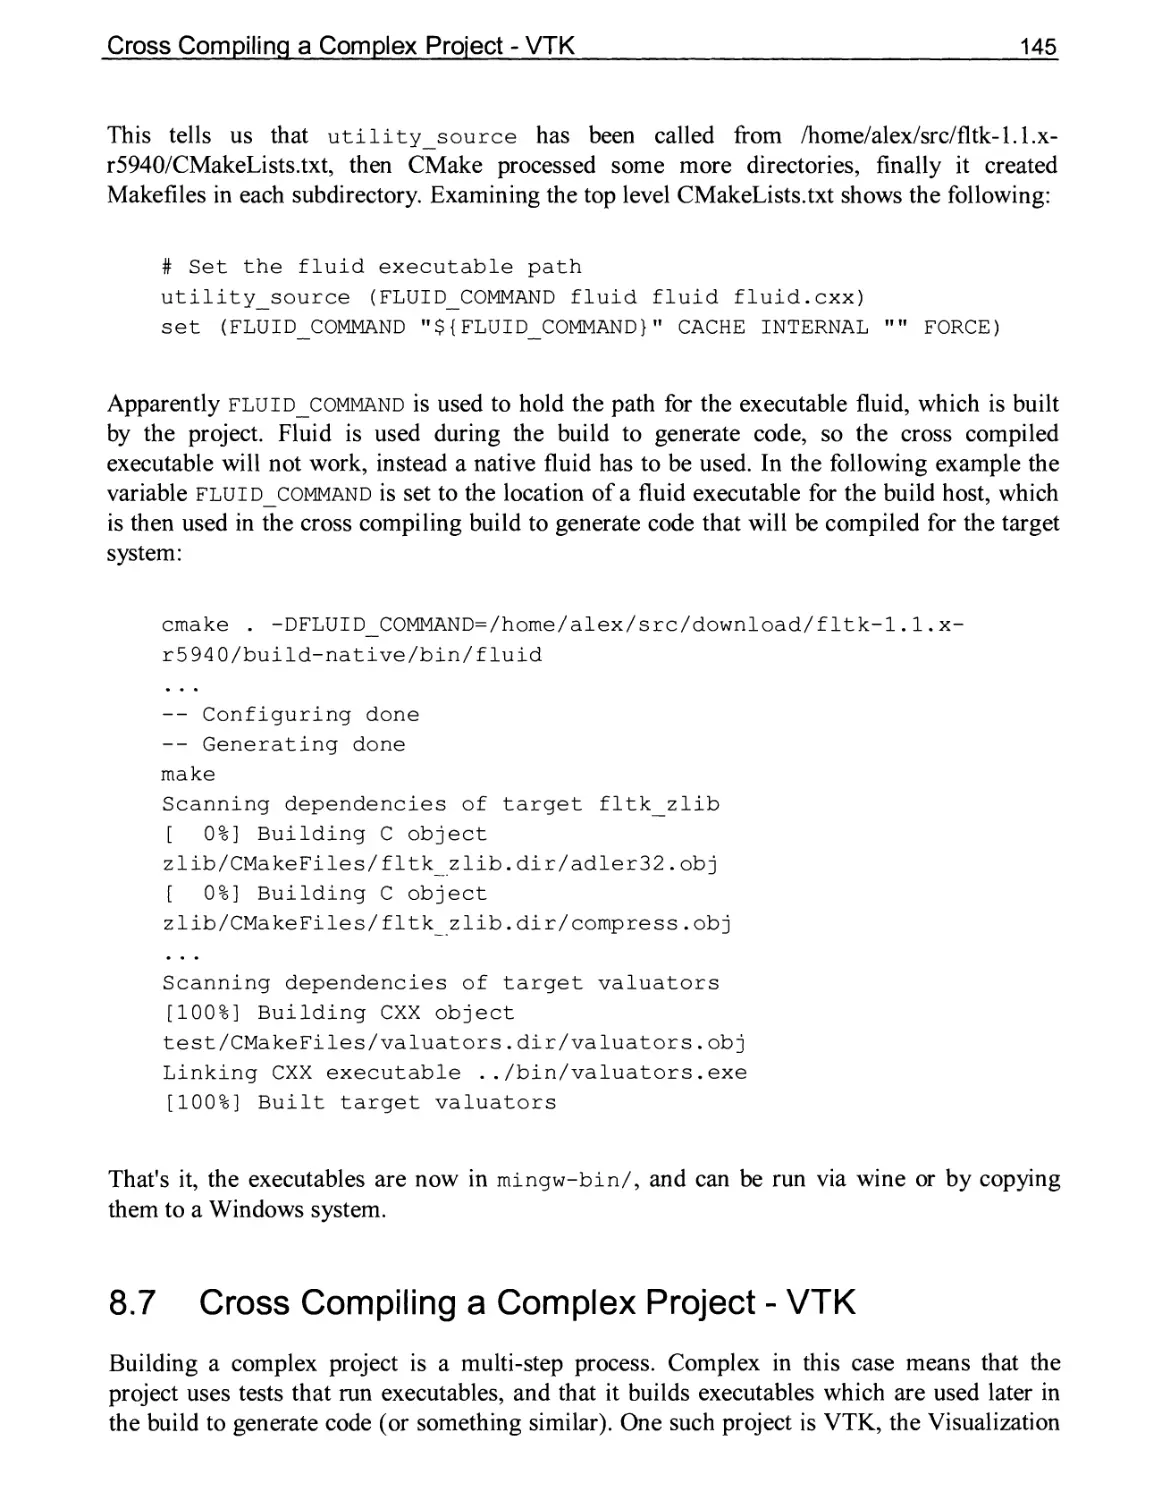 8.7 Cross Compiling a Complex Project - VTK